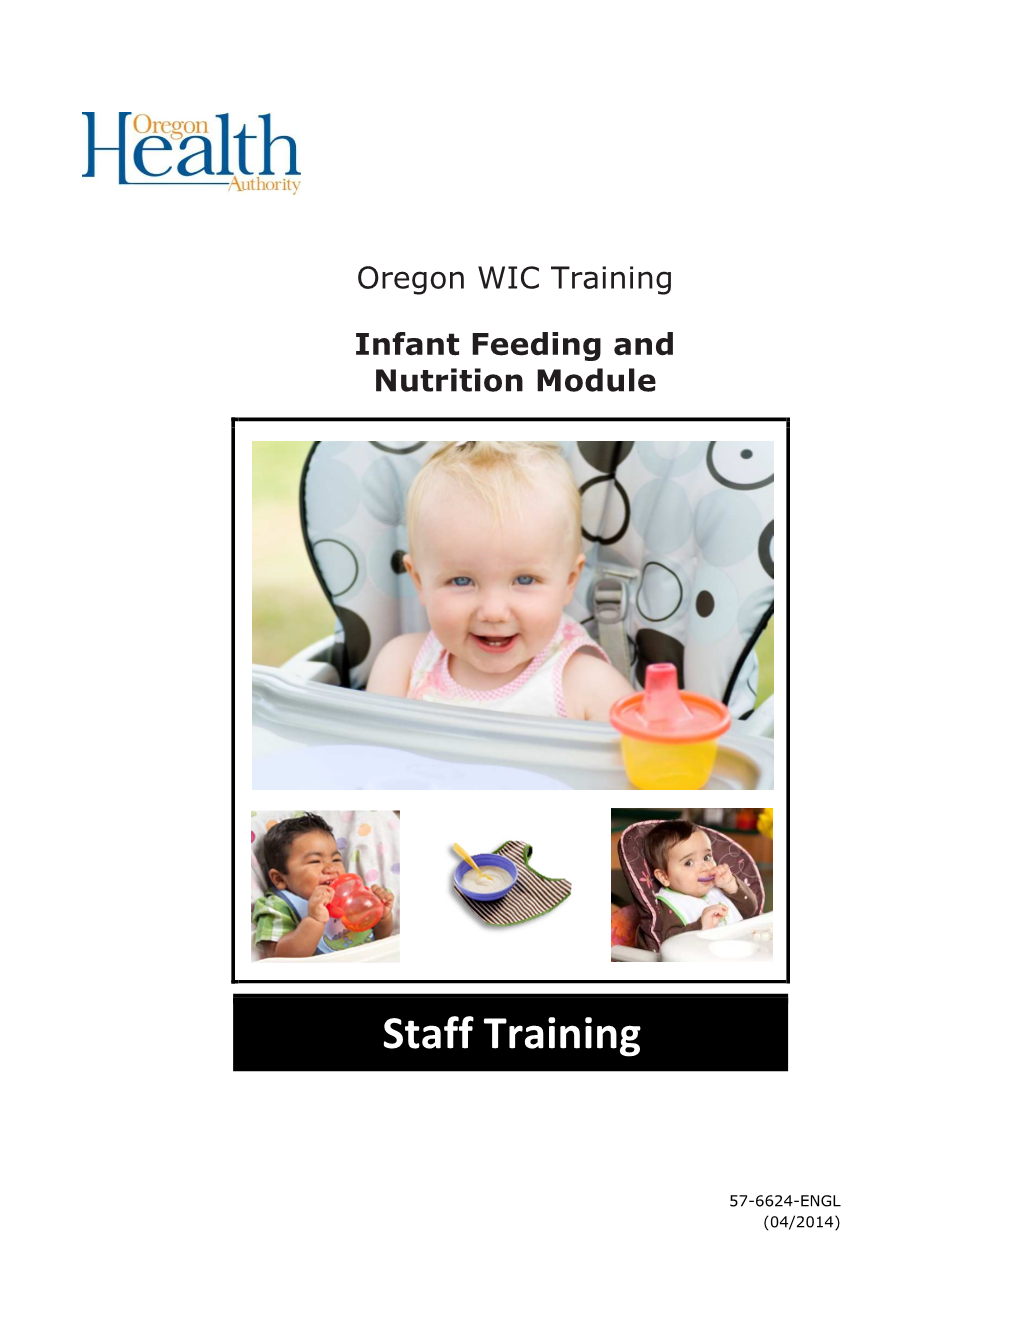 Oregon WIC Training Infant Feeding and Nutrition Module